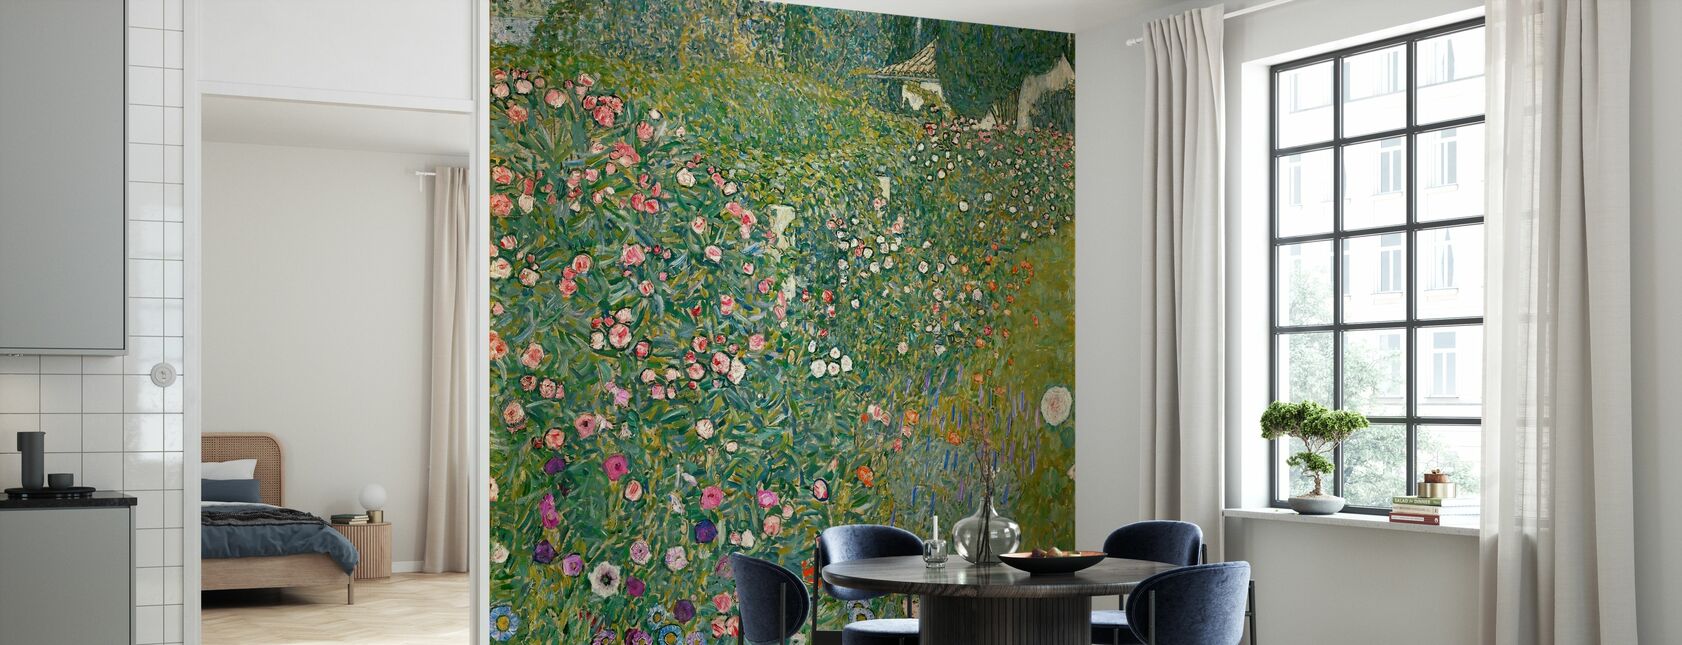 Klimt, Gustav - Italian Garden Landscape - Wallpaper - Kitchen